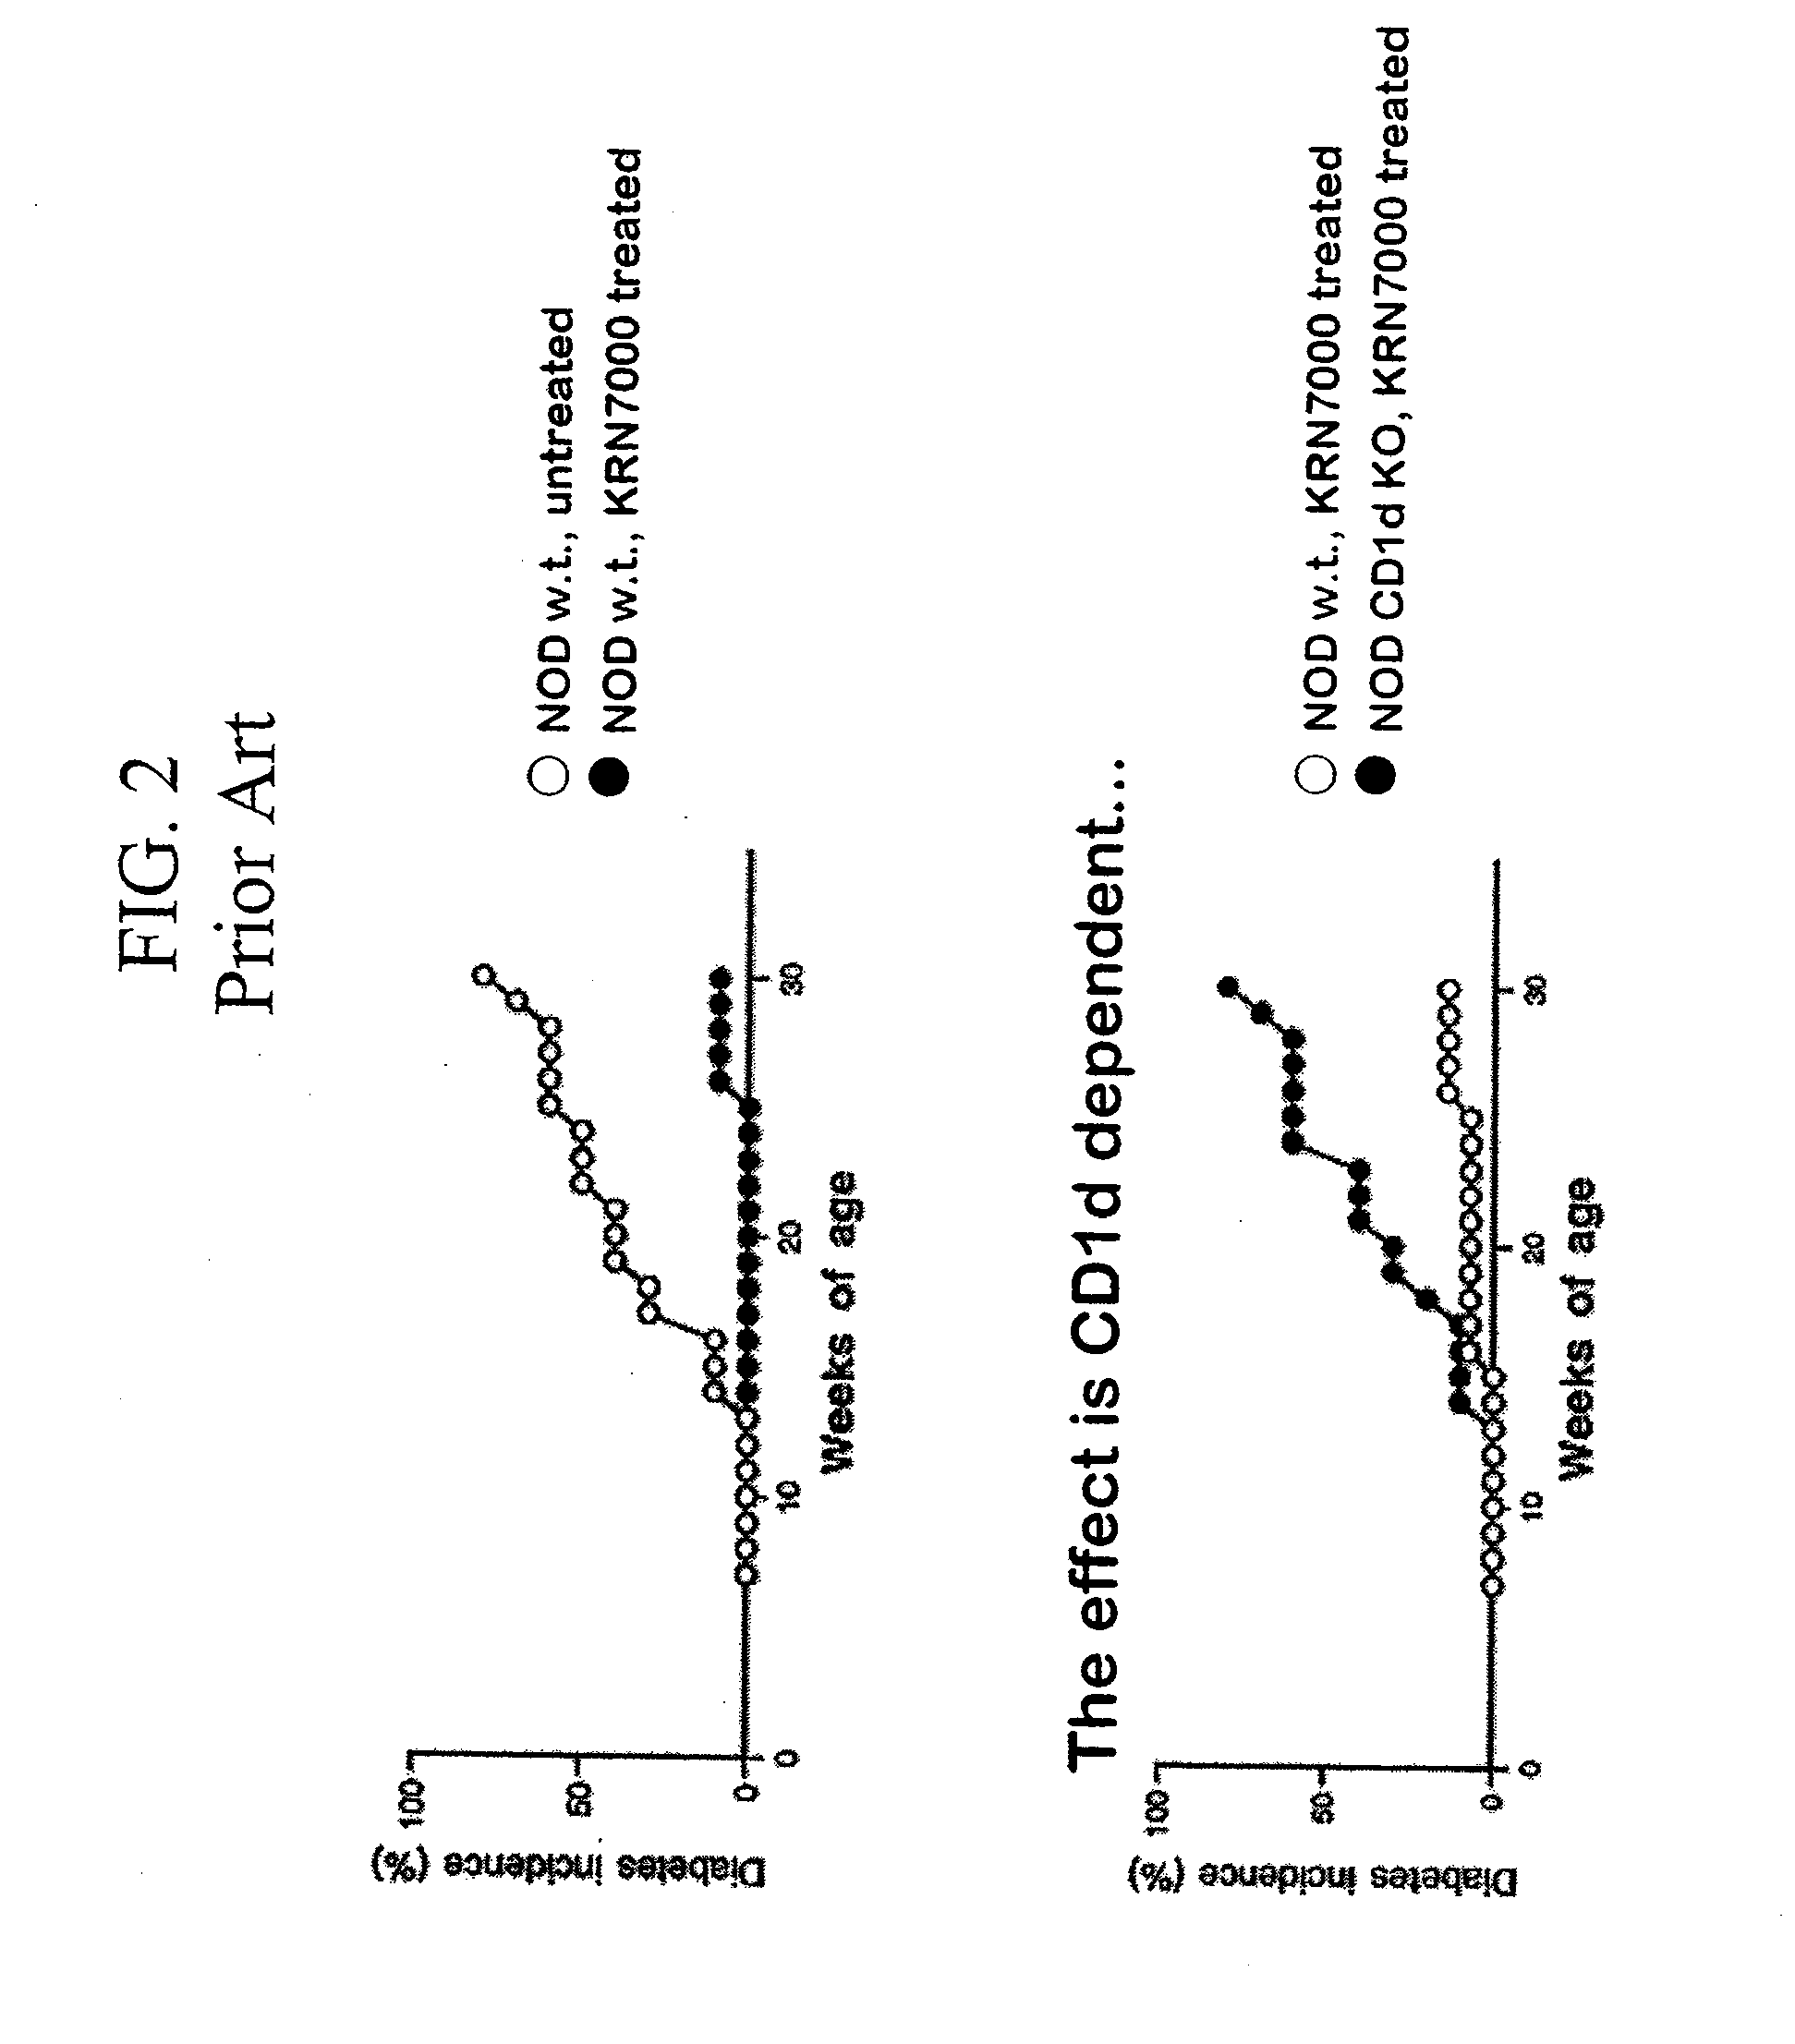 Ceramide derivatives as modulators of immunity and autoimmunity